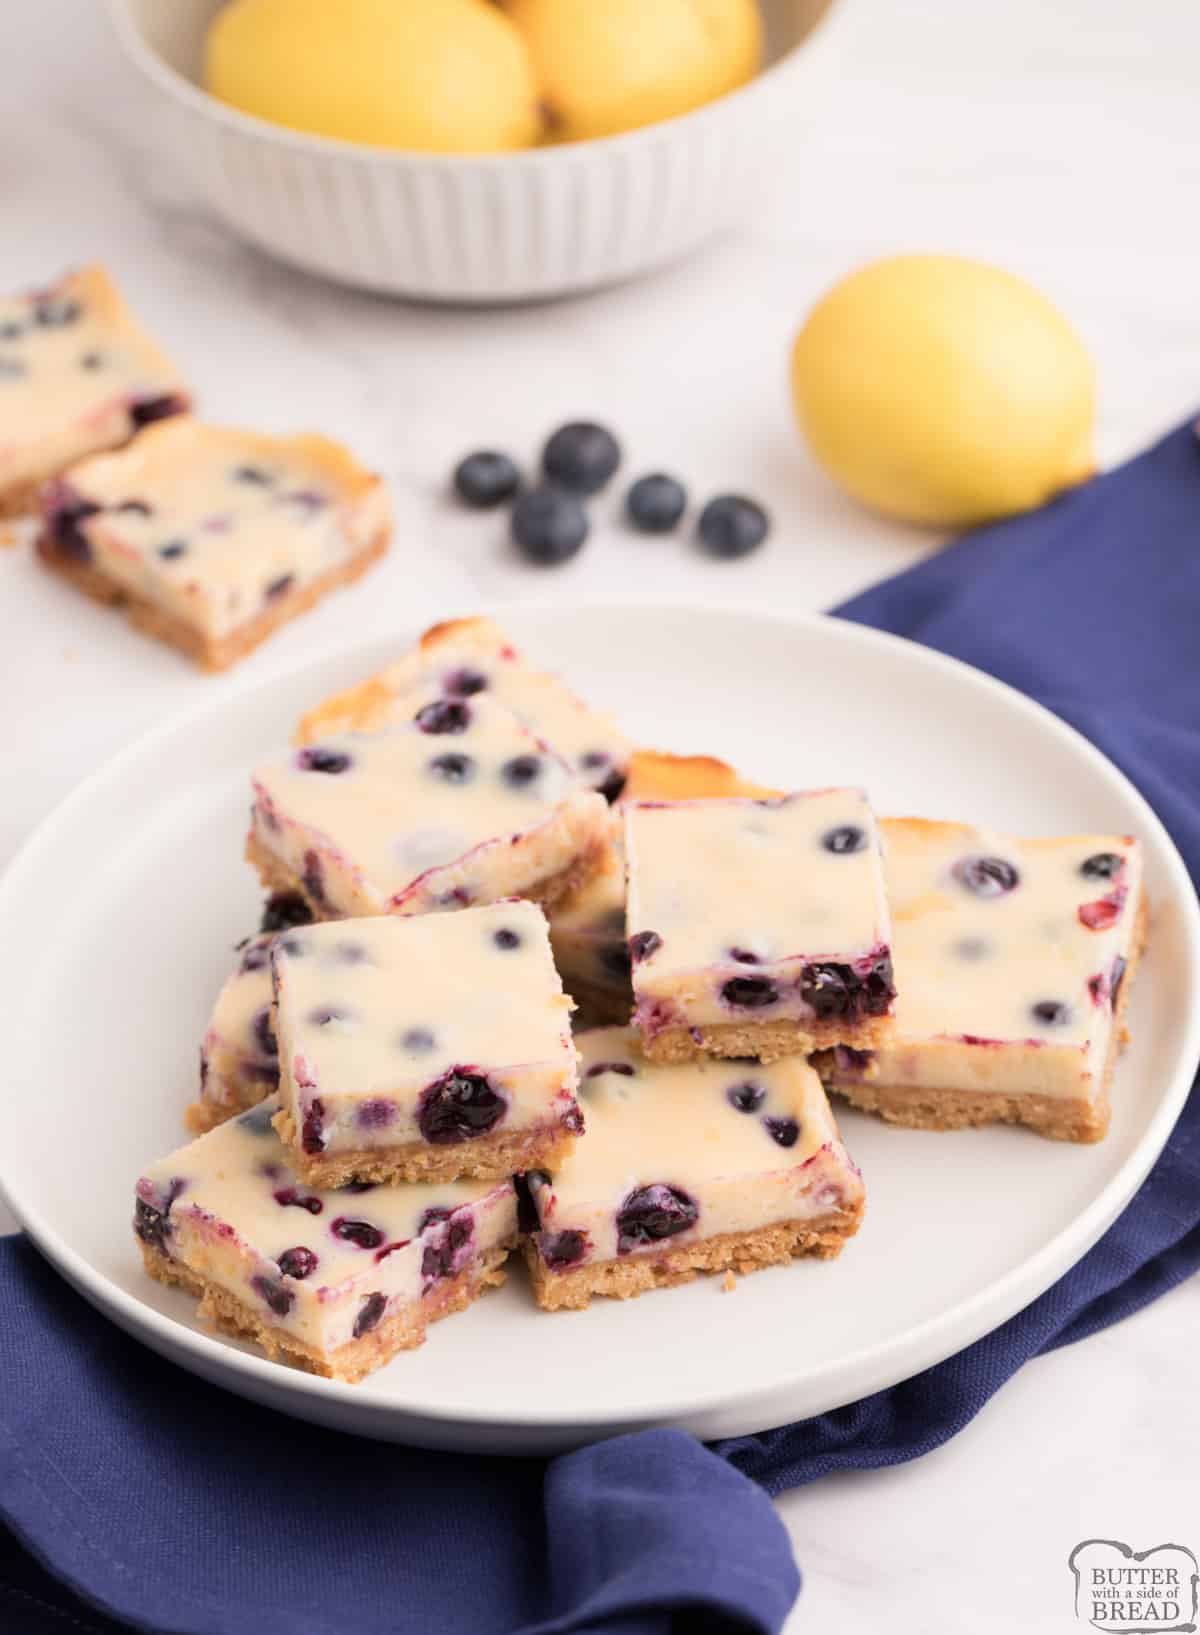 Dessert bars made with blueberries and lemon filling